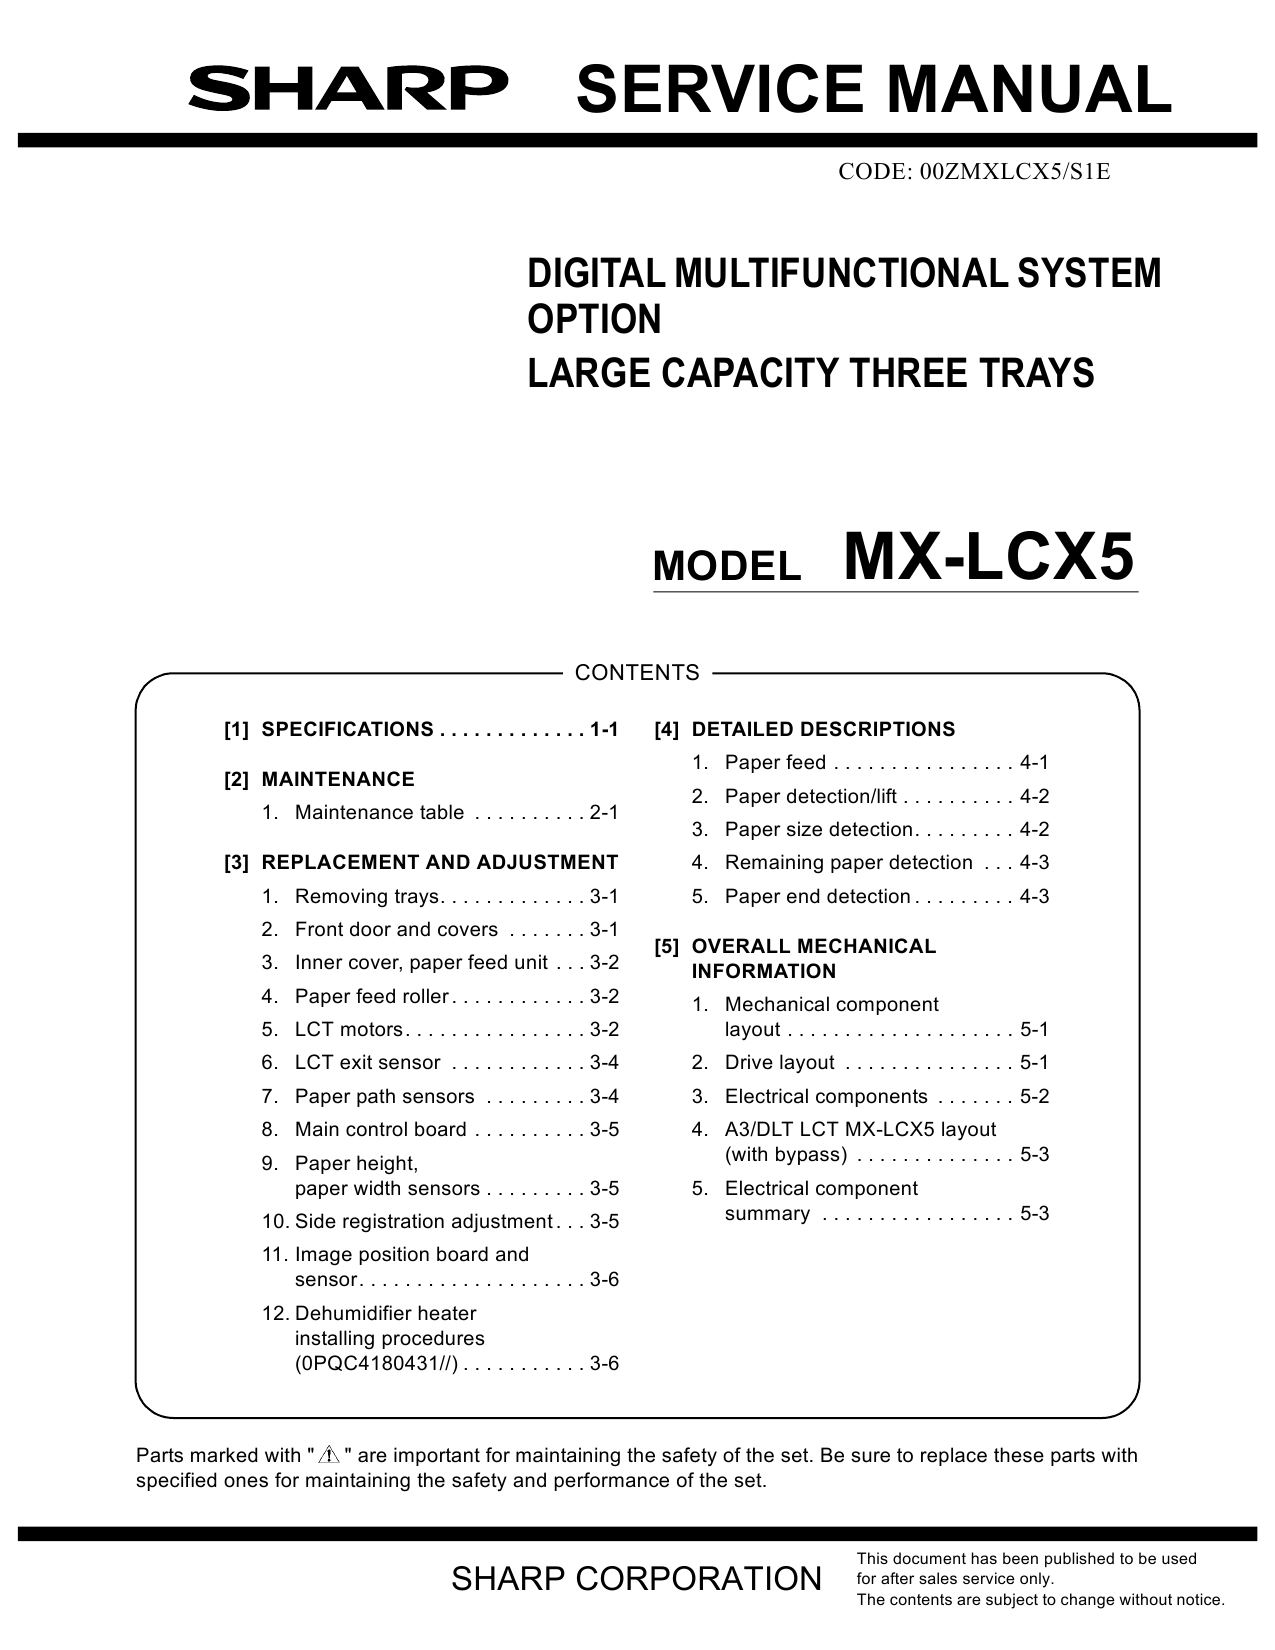 SHARP MX LCX5 Service Manual-1